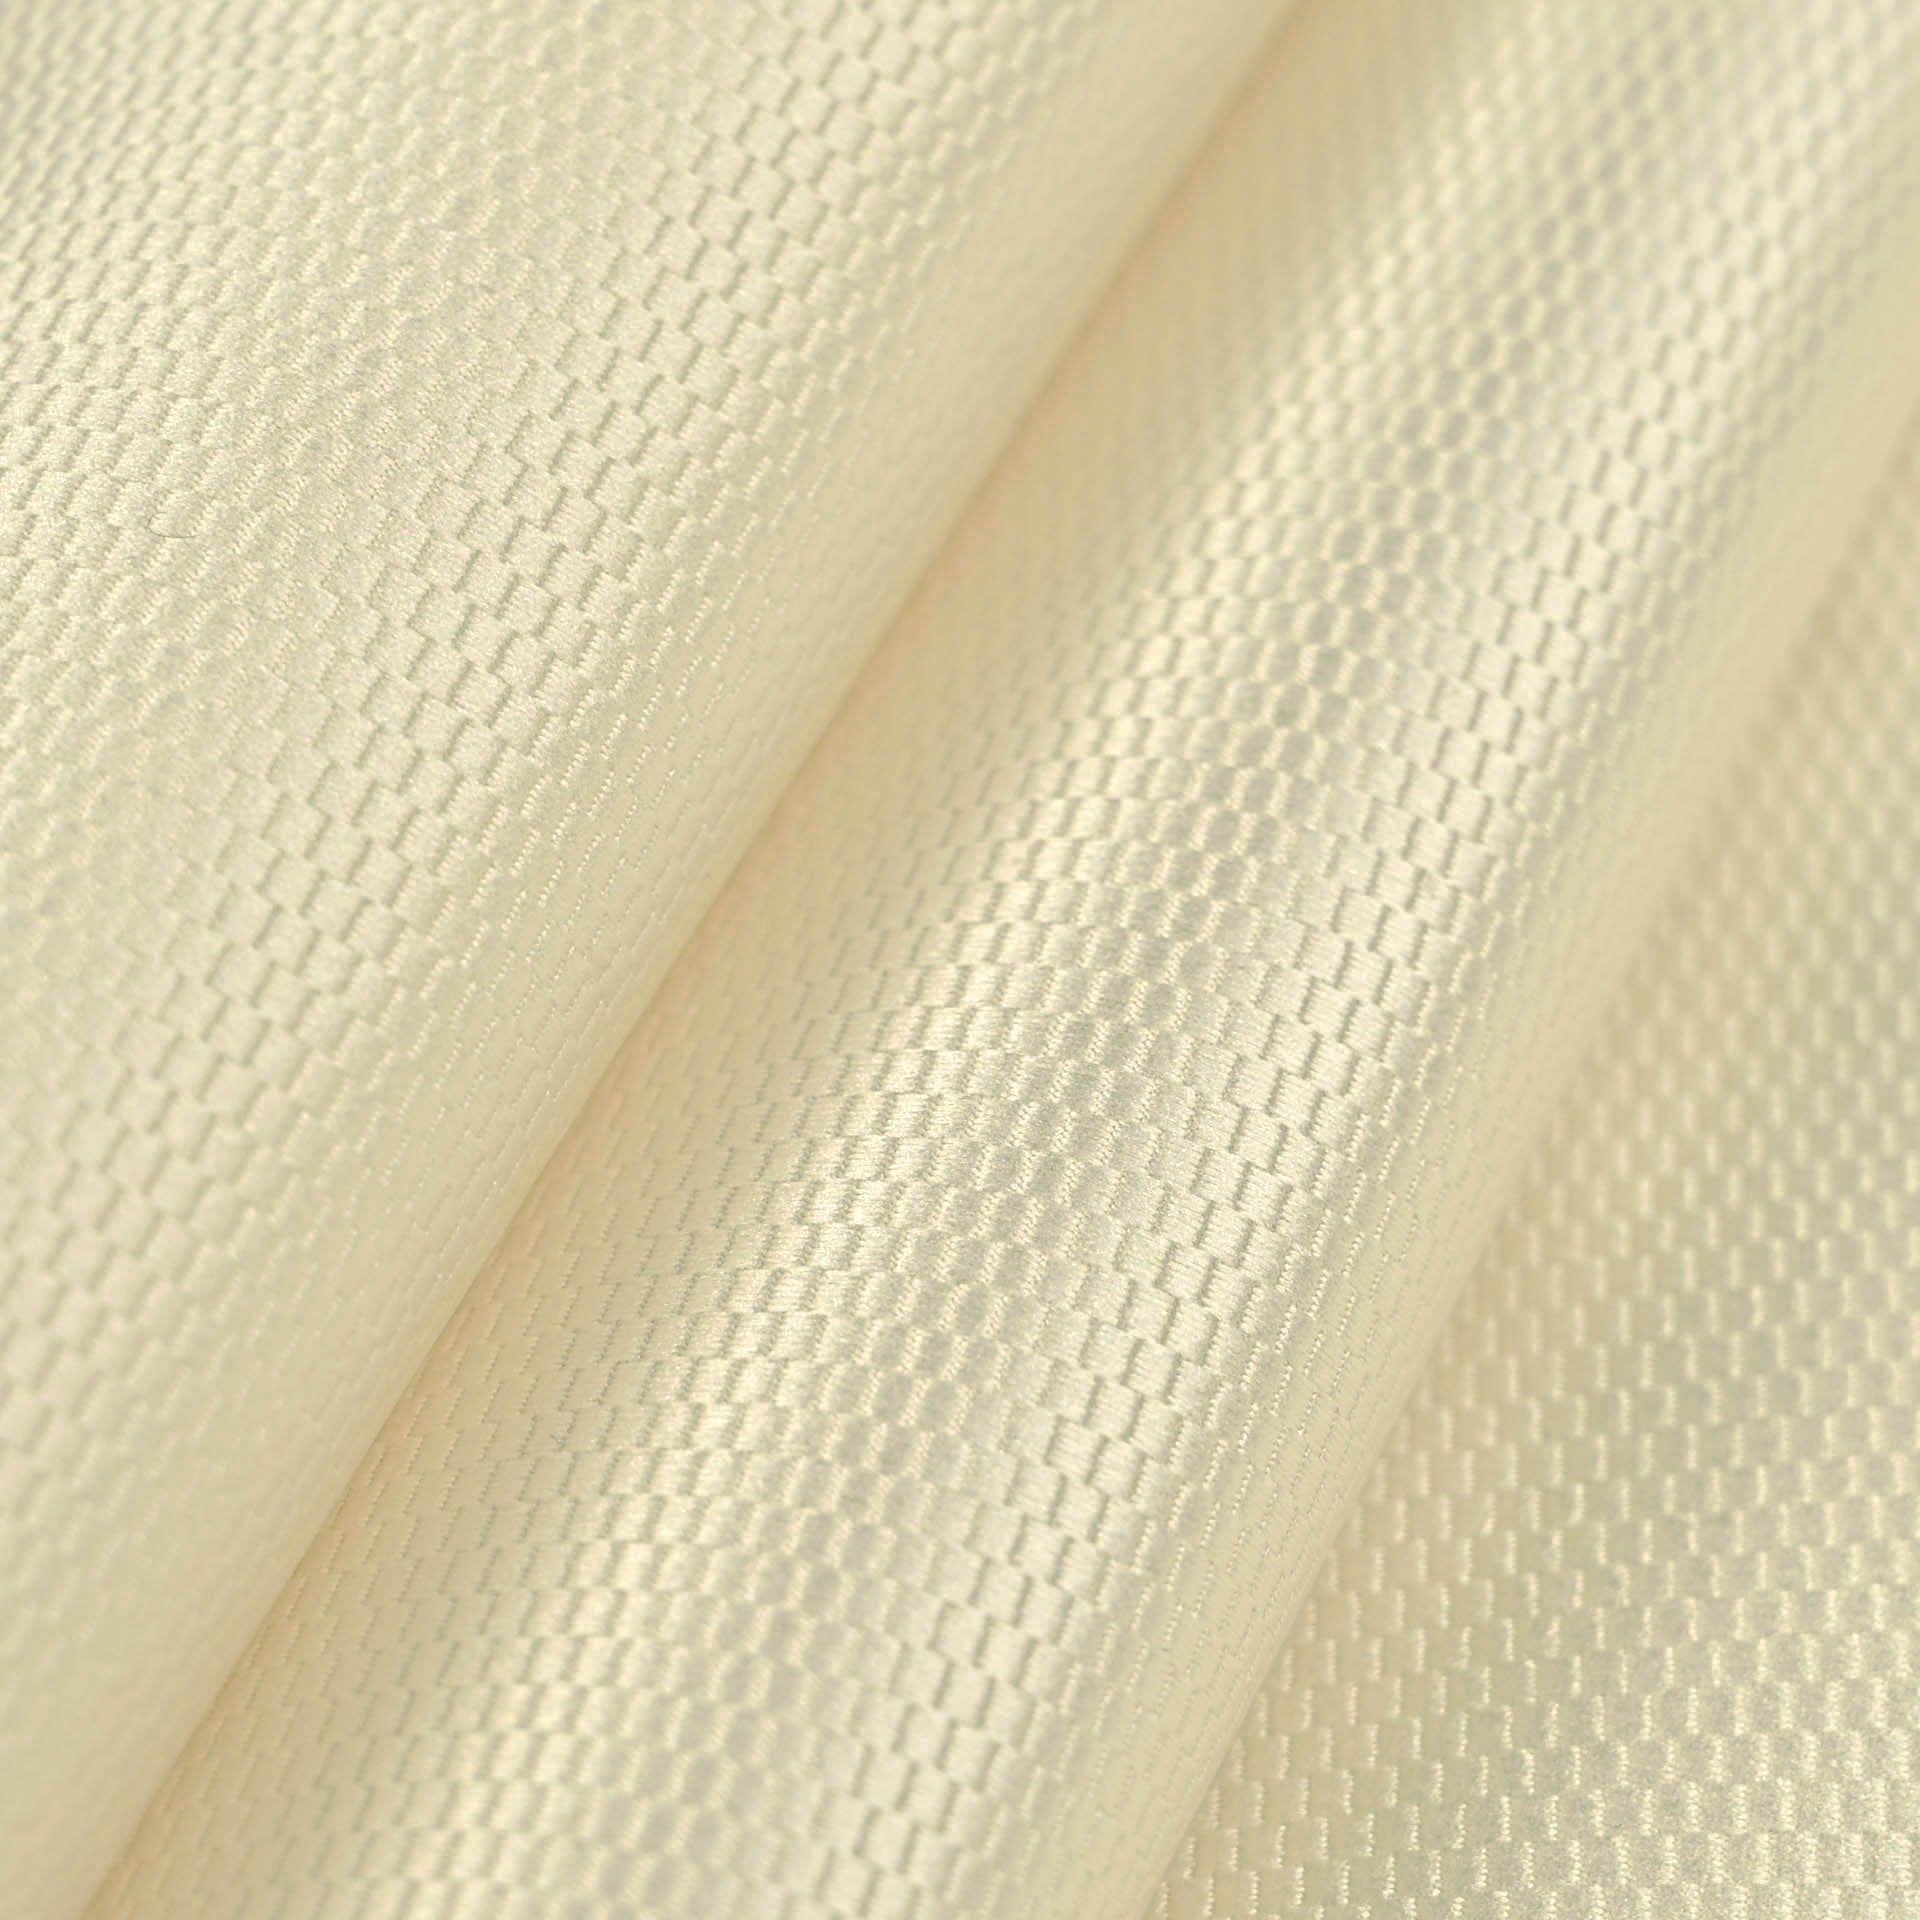 Vanilla Micro Jacquard Fabric 97095